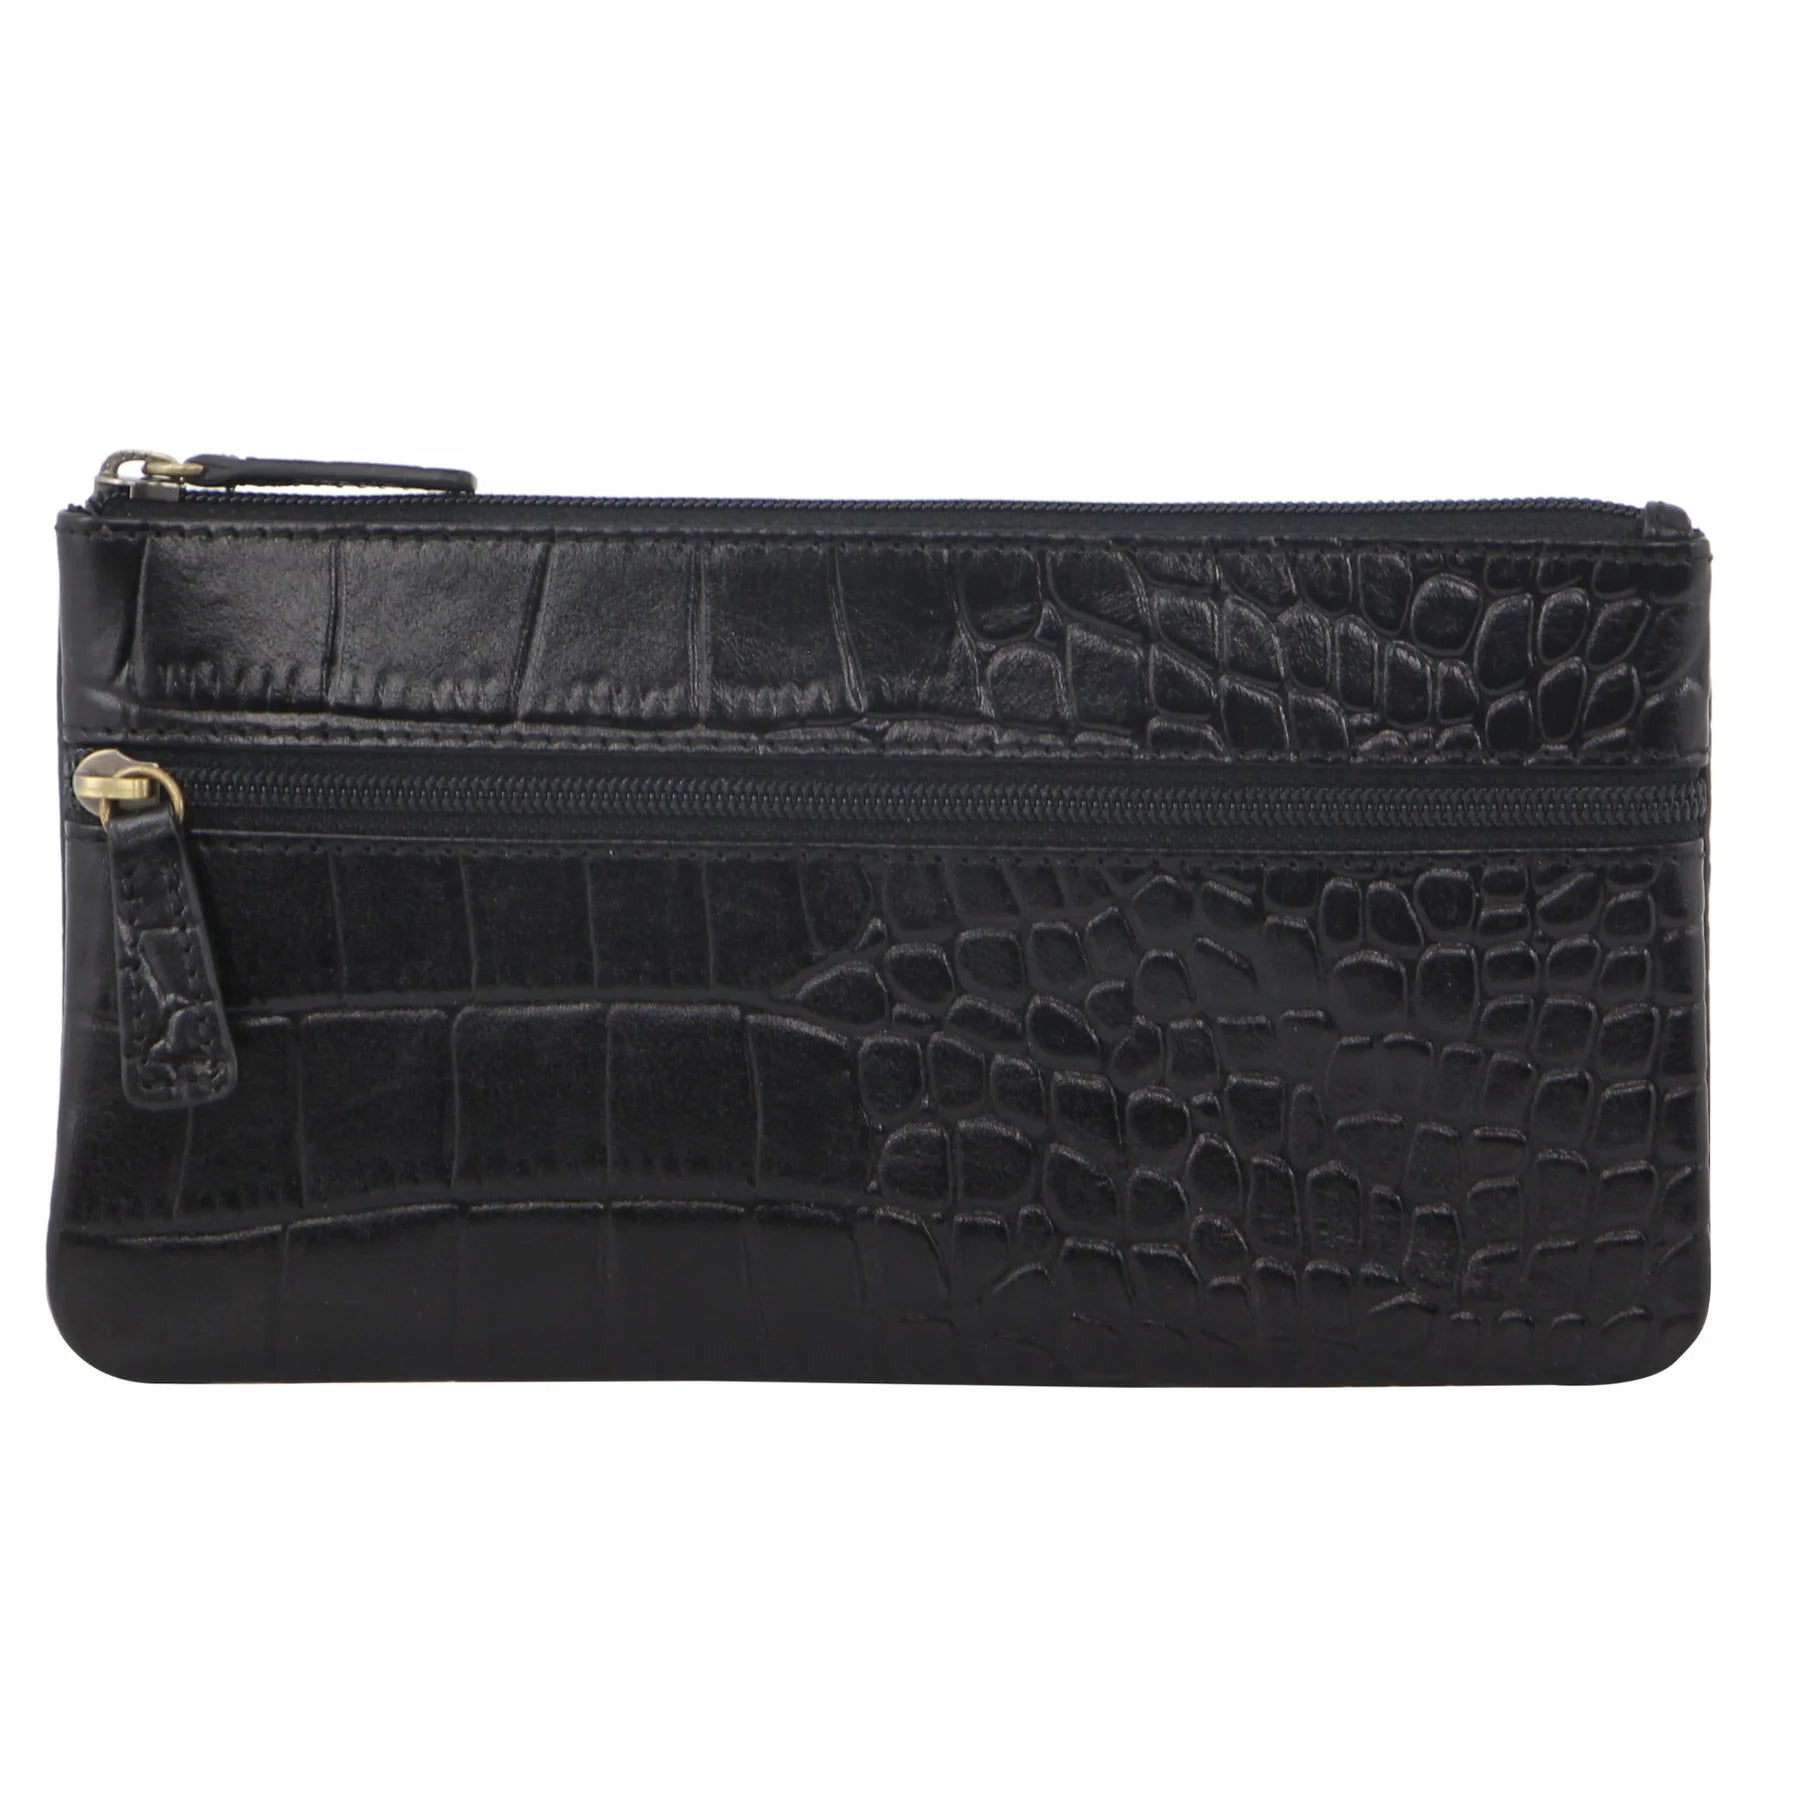 Pierre Cardin Shoulder Bag Matte Black Original Perre Cardin Bag 2 Year  Warranty | eBay